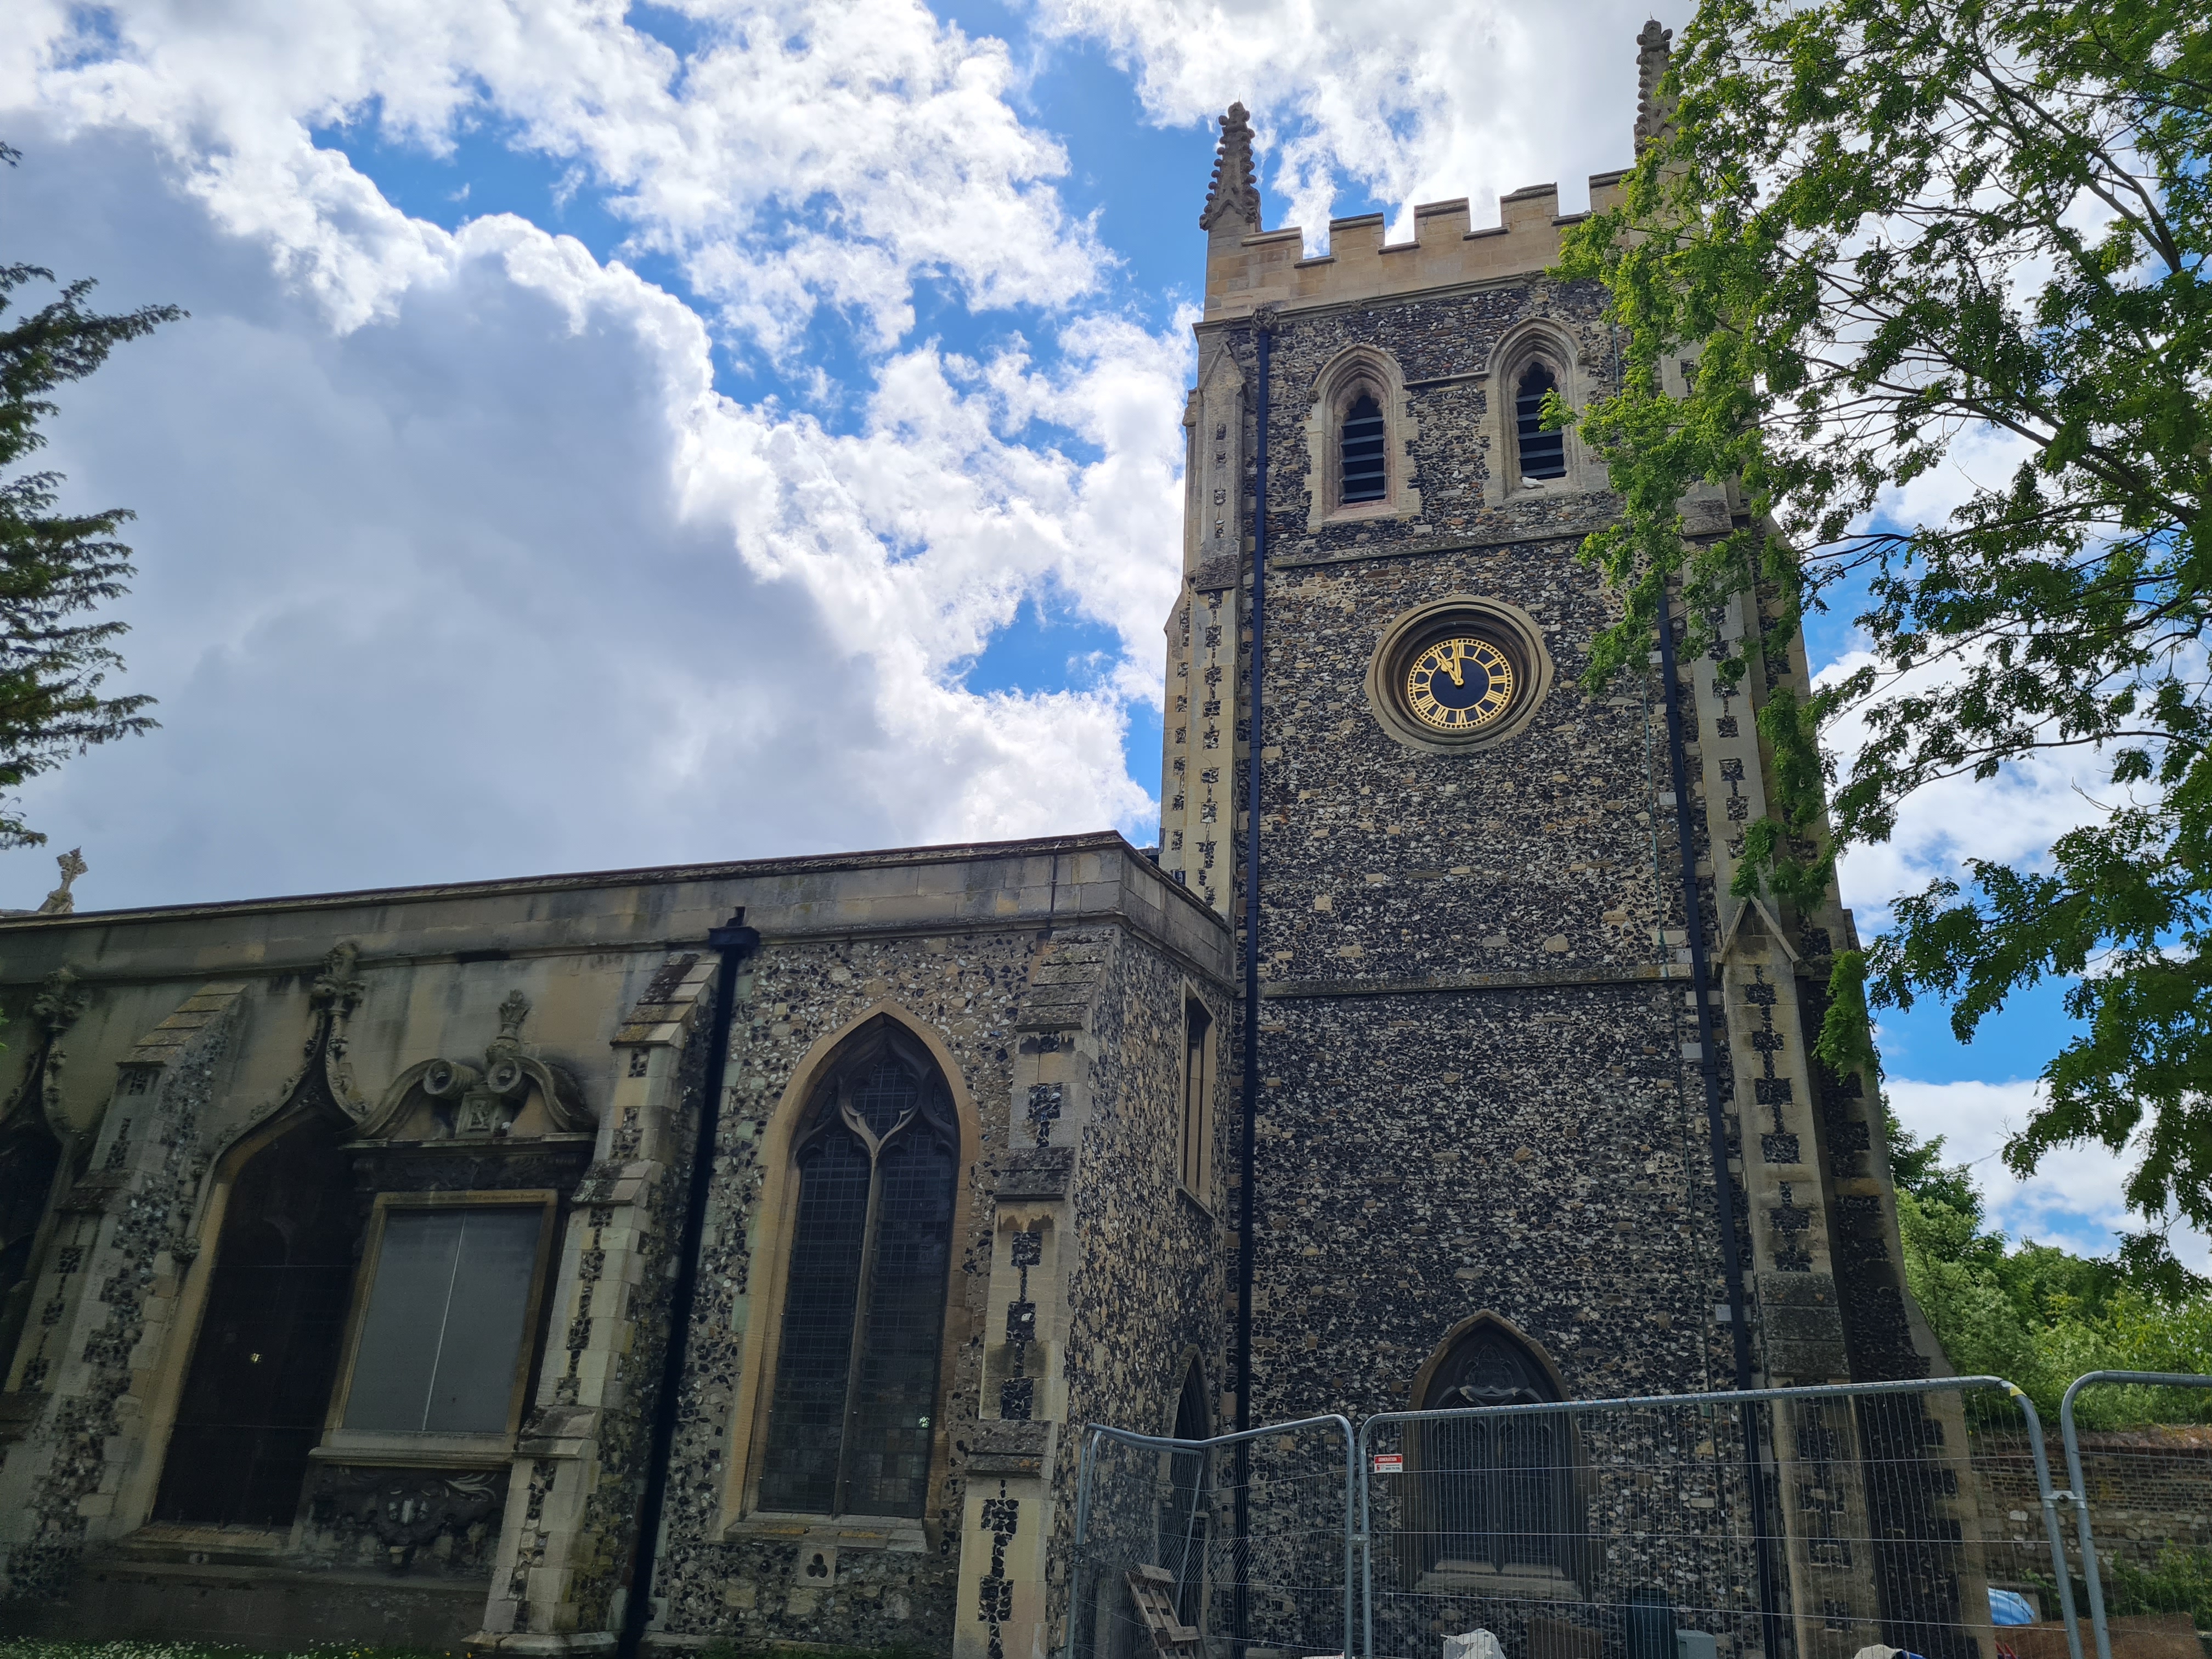 Royston church tower